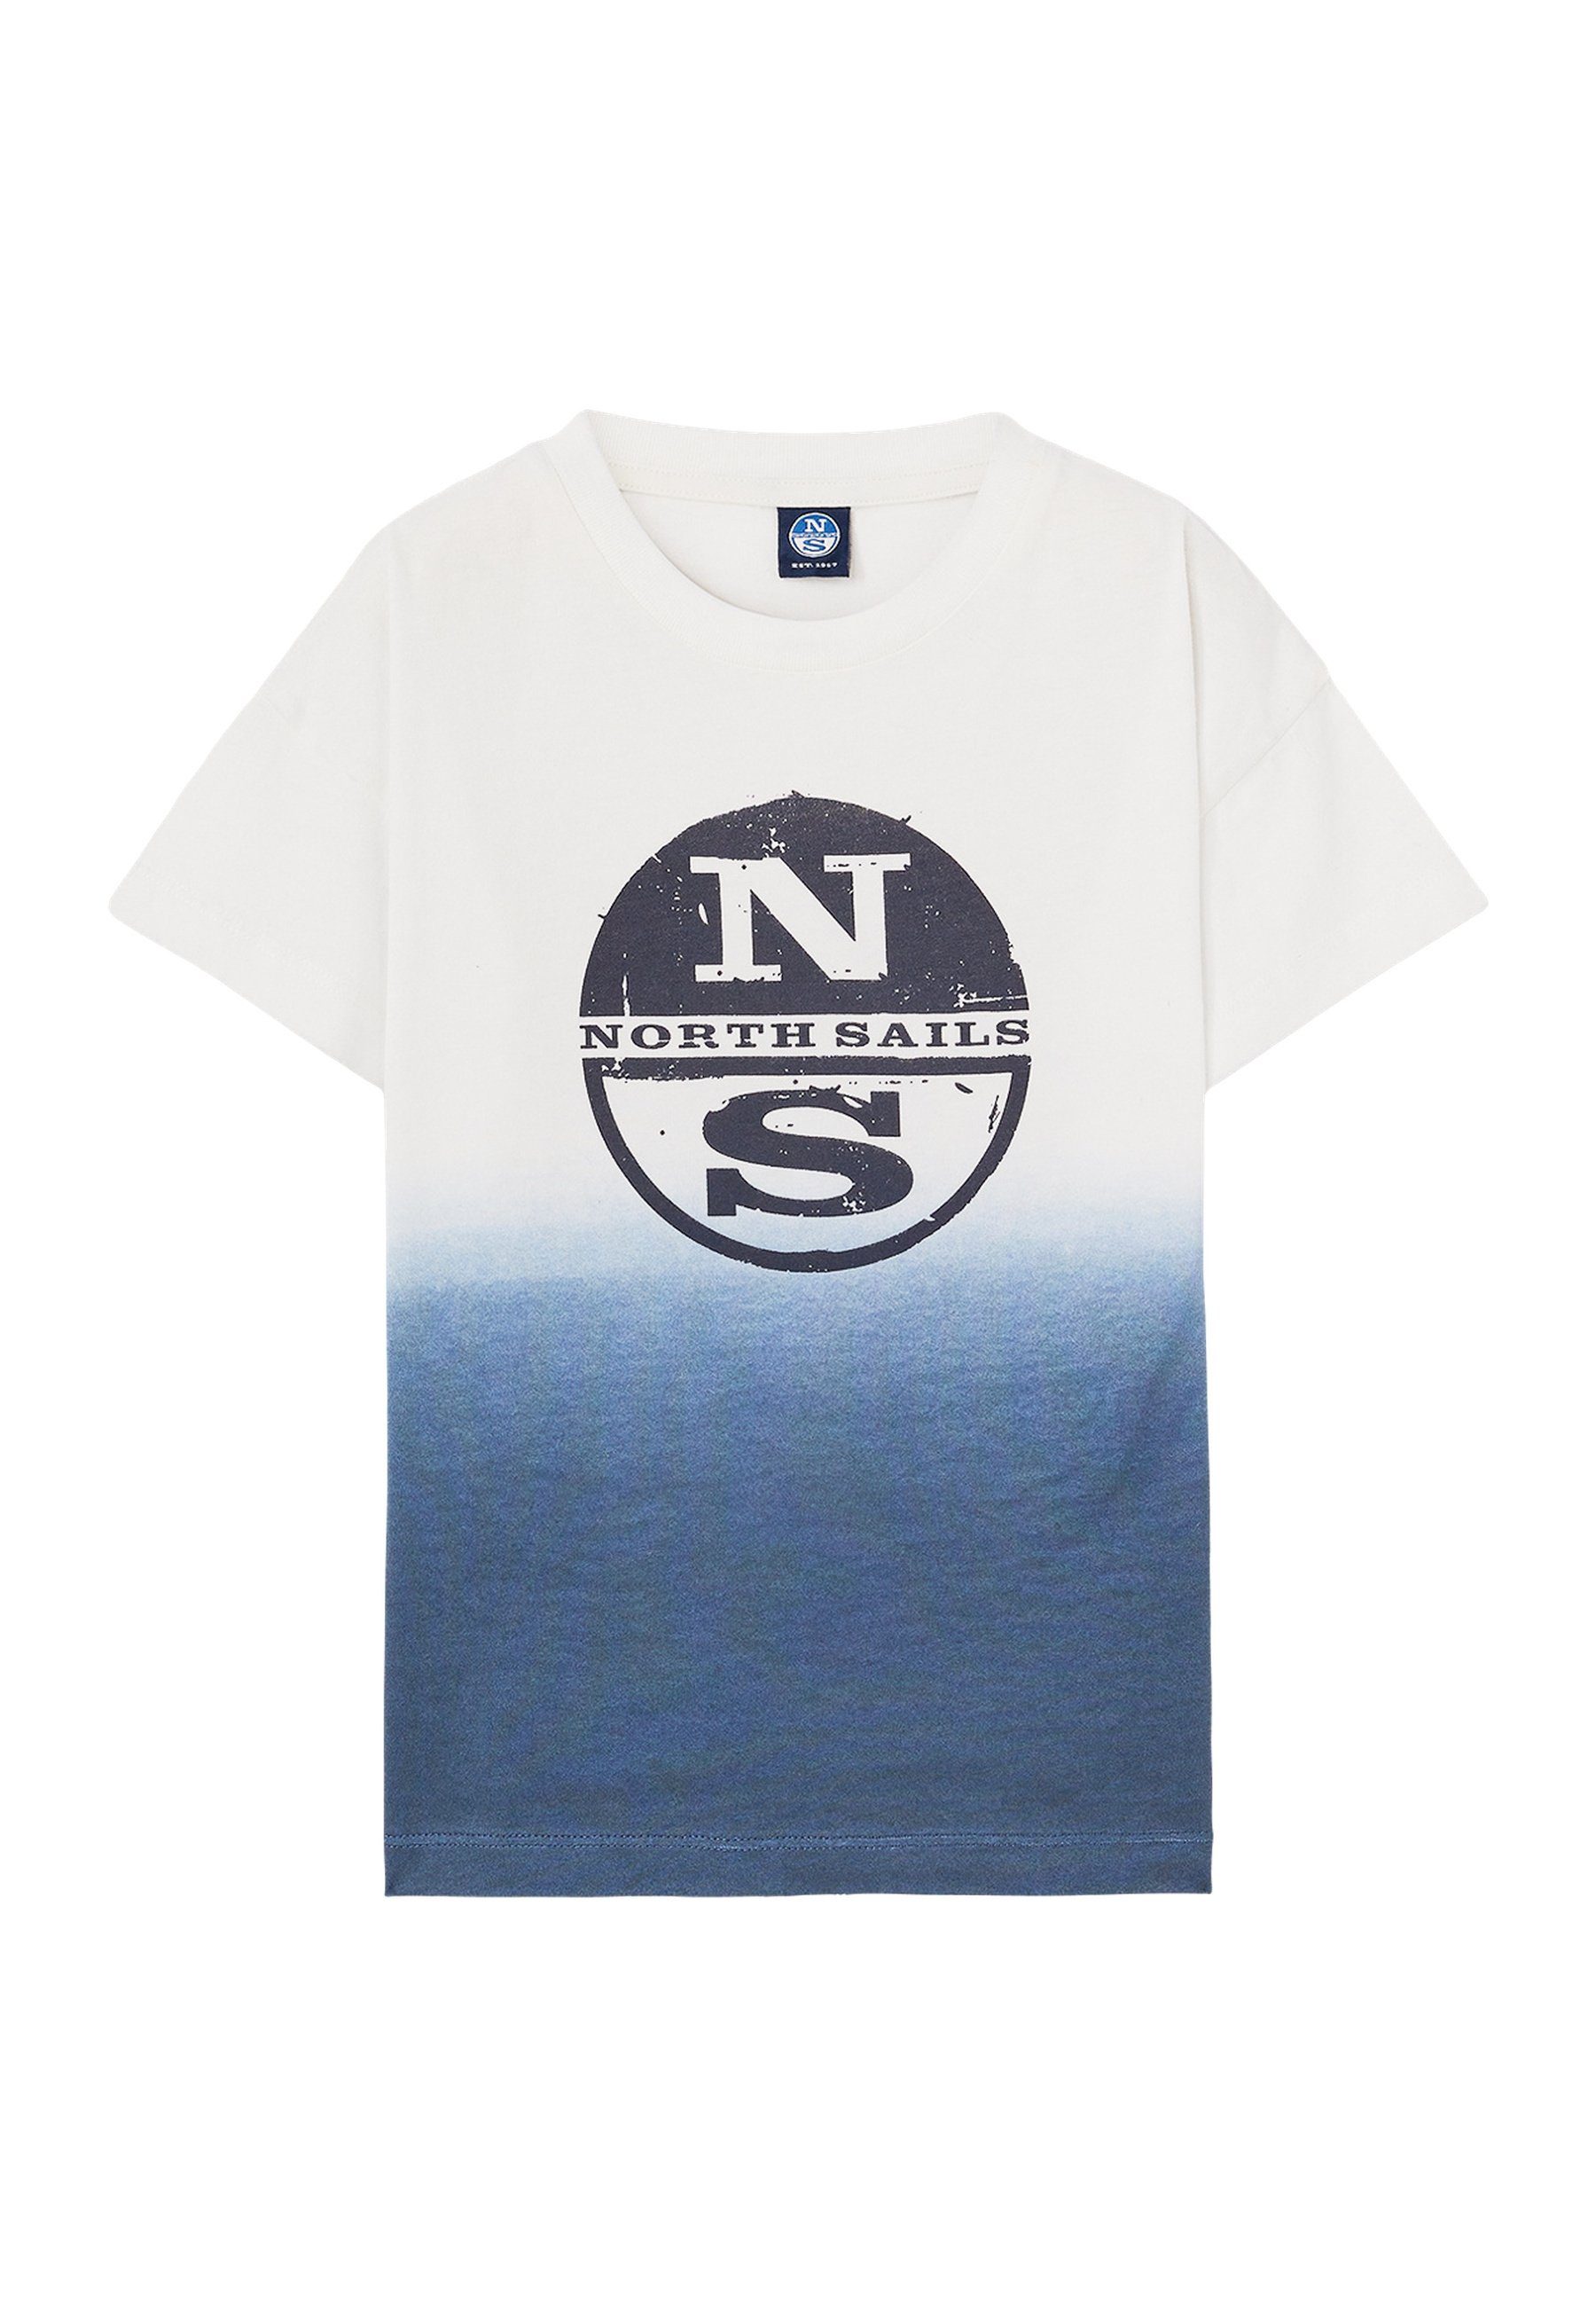 Sails North T-Shirt mit T-Shirt Degradé-Print